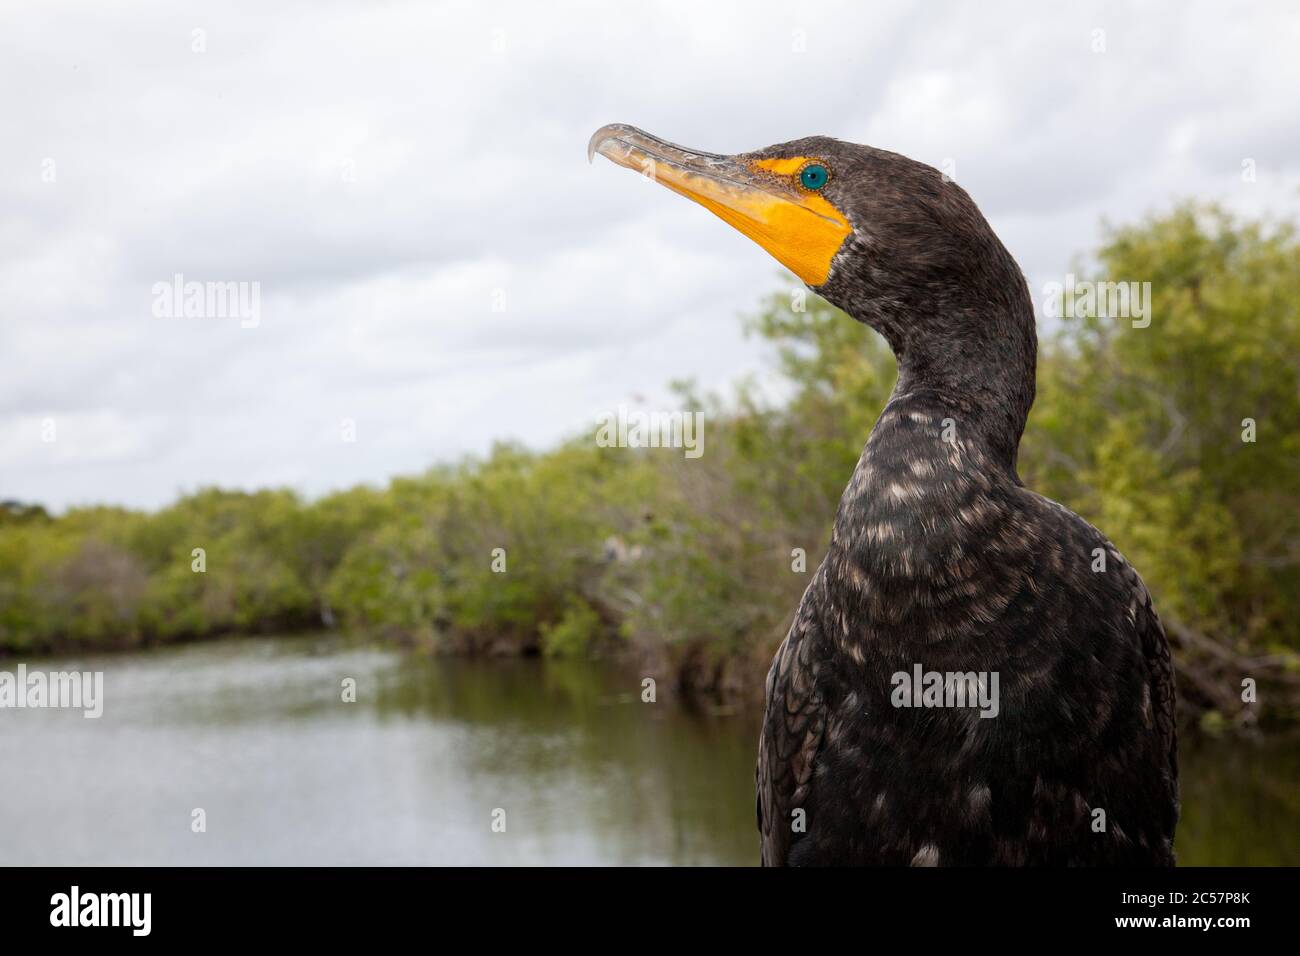 A close view of a Florida cormorant in the Florida everglades, USA Stock Photo